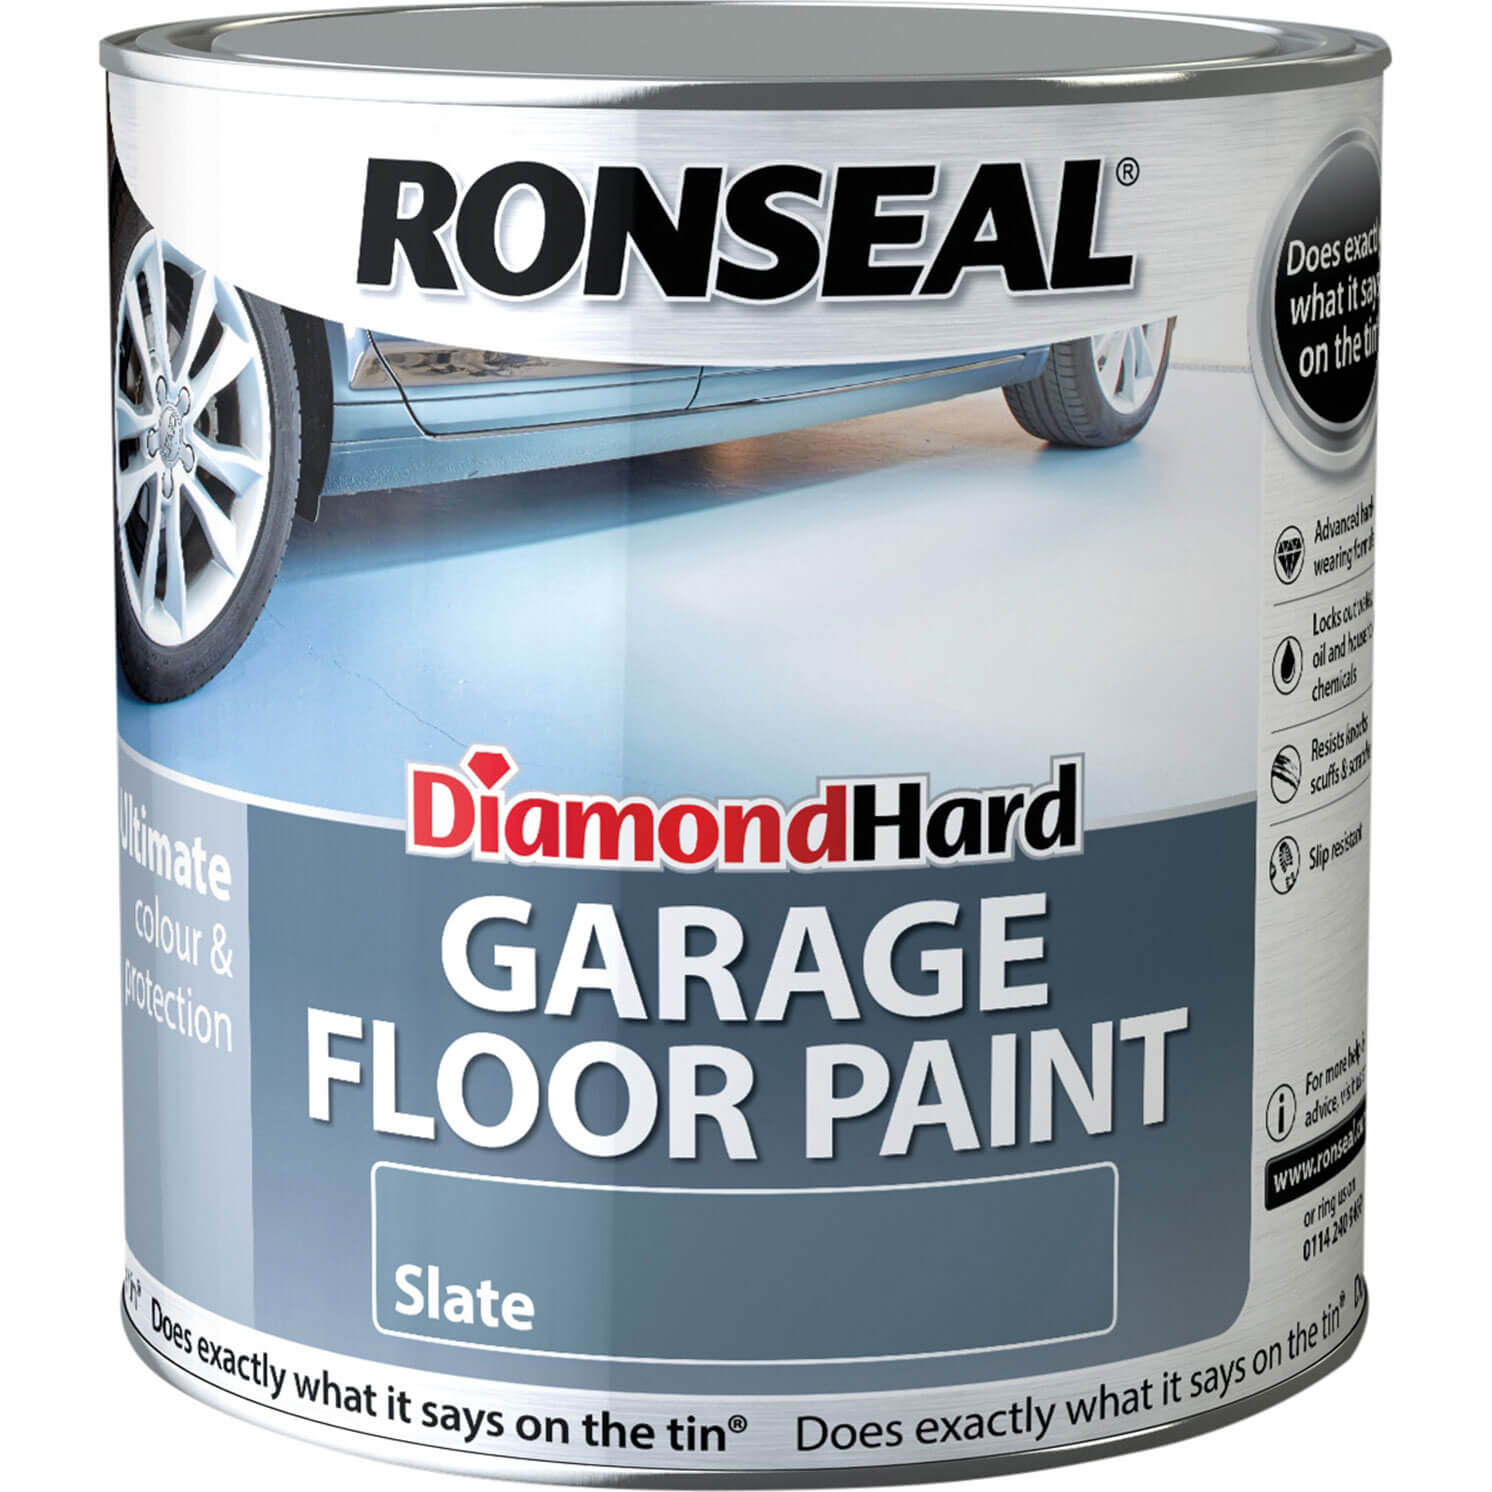 Image of Ronseal Diamond Hard Garage Floor Paint Slate 5l